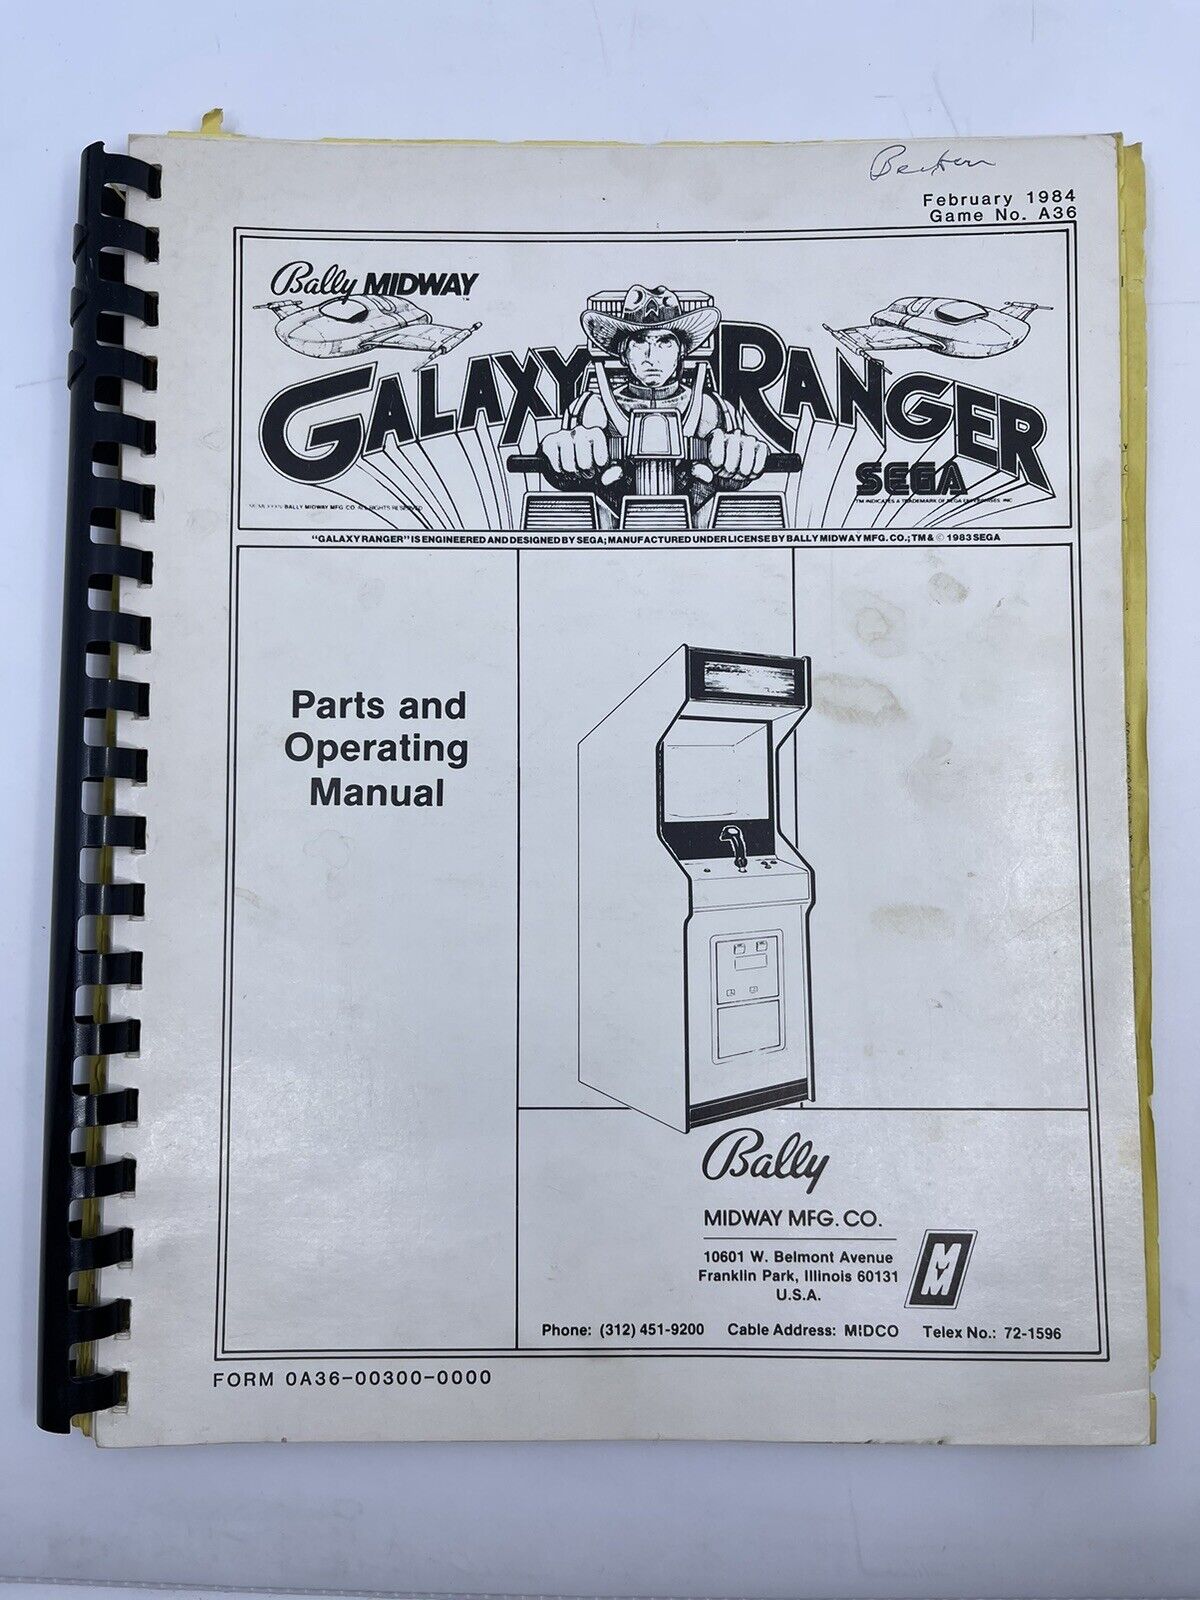 Original Bally Midway Sega Galaxy Ranger Arcade Operating Manual Complete